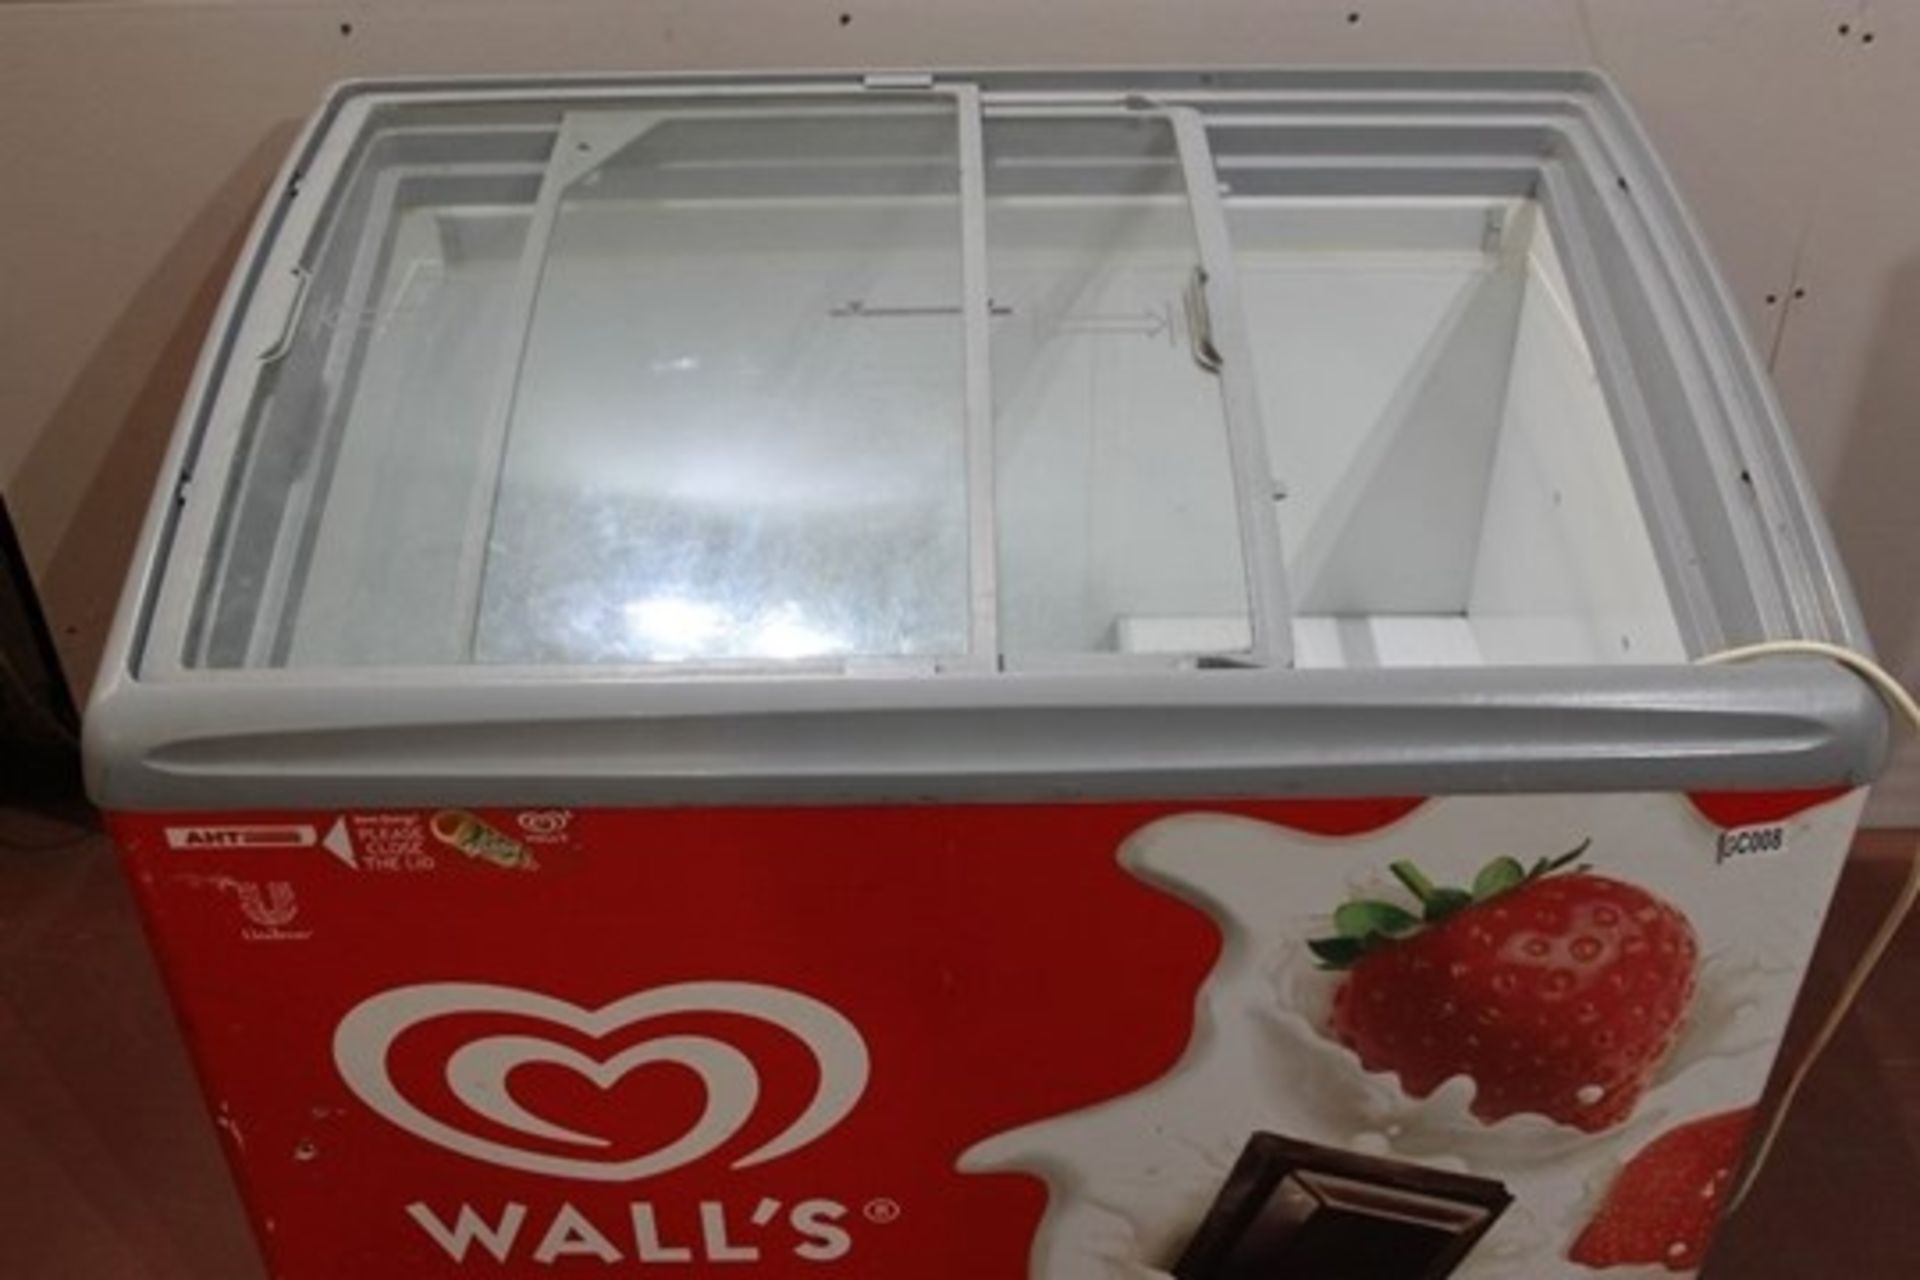 Walls Ice Cream Retail Freezer with Glass Sliding Doors -1ph